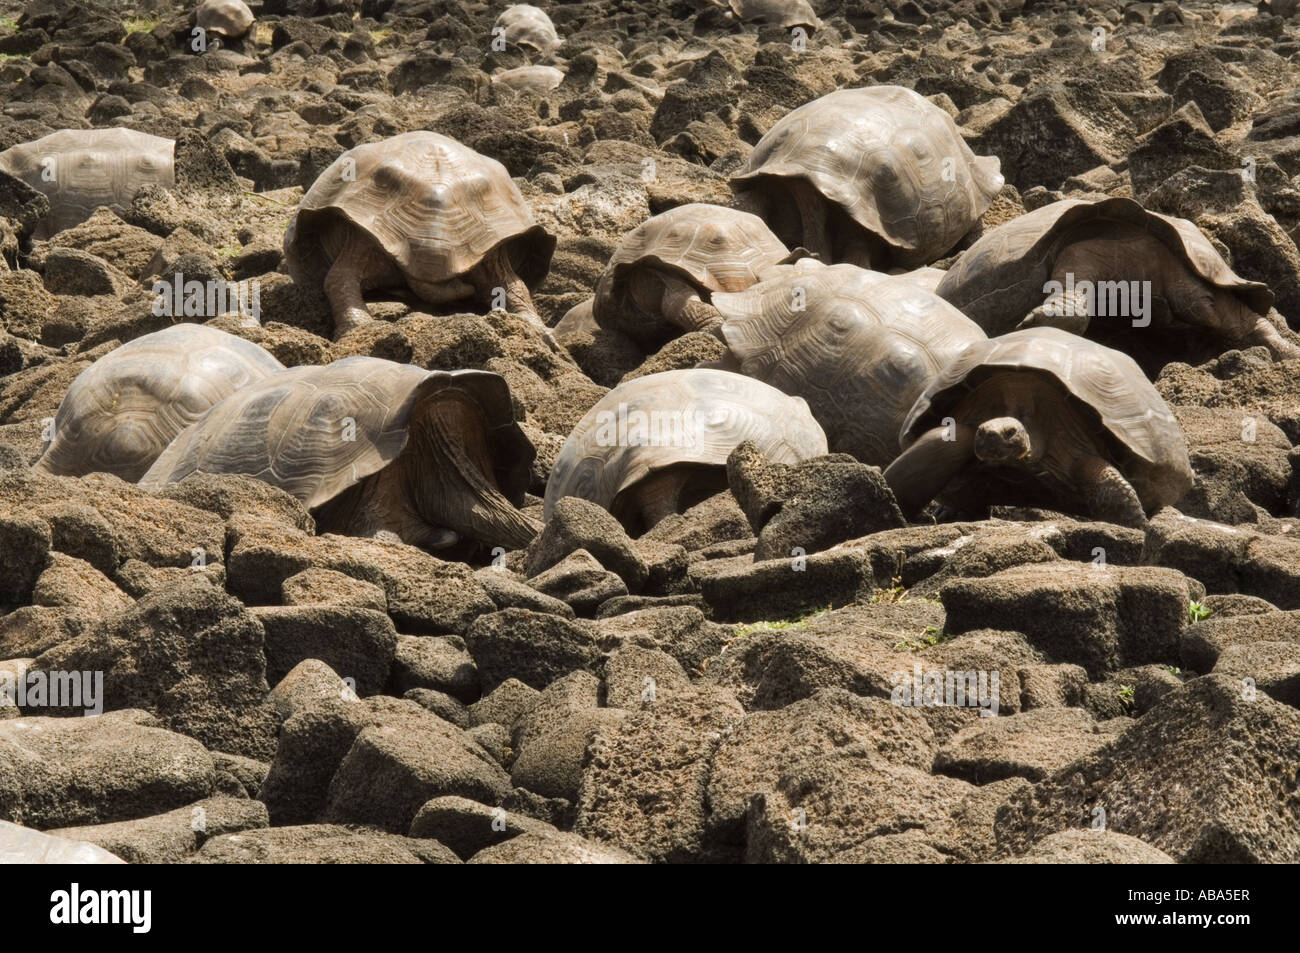 Tortuga Gigante de las Galápagos (Geochelone elephantopus chatamensis) para buscar agua entre piedras de lava lago secado-cama Galápagos Foto de stock